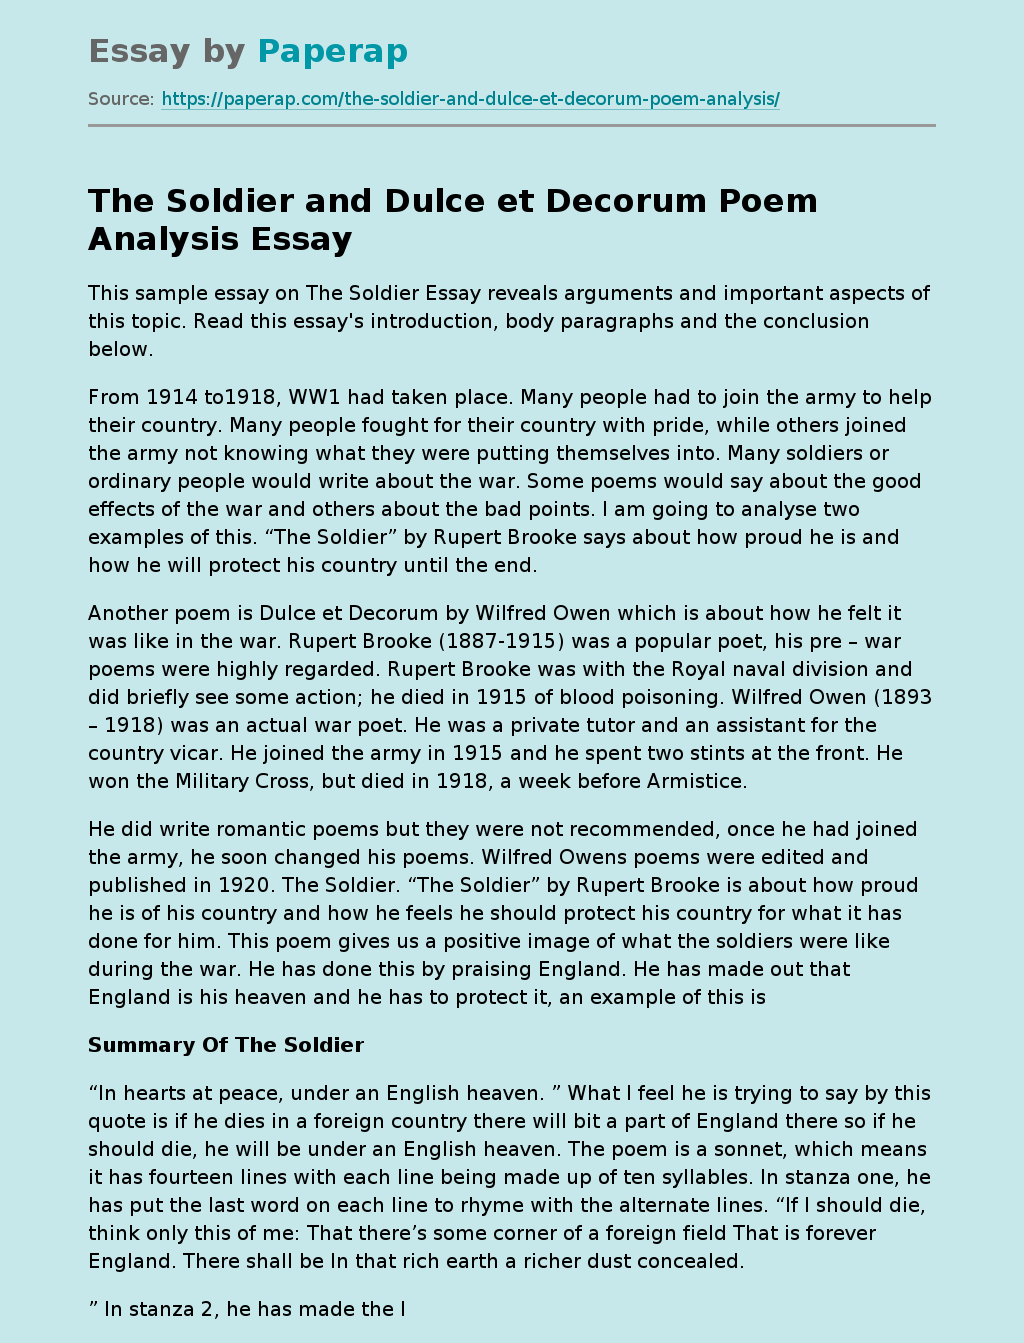 The Soldier and Dulce et Decorum Poem Analysis